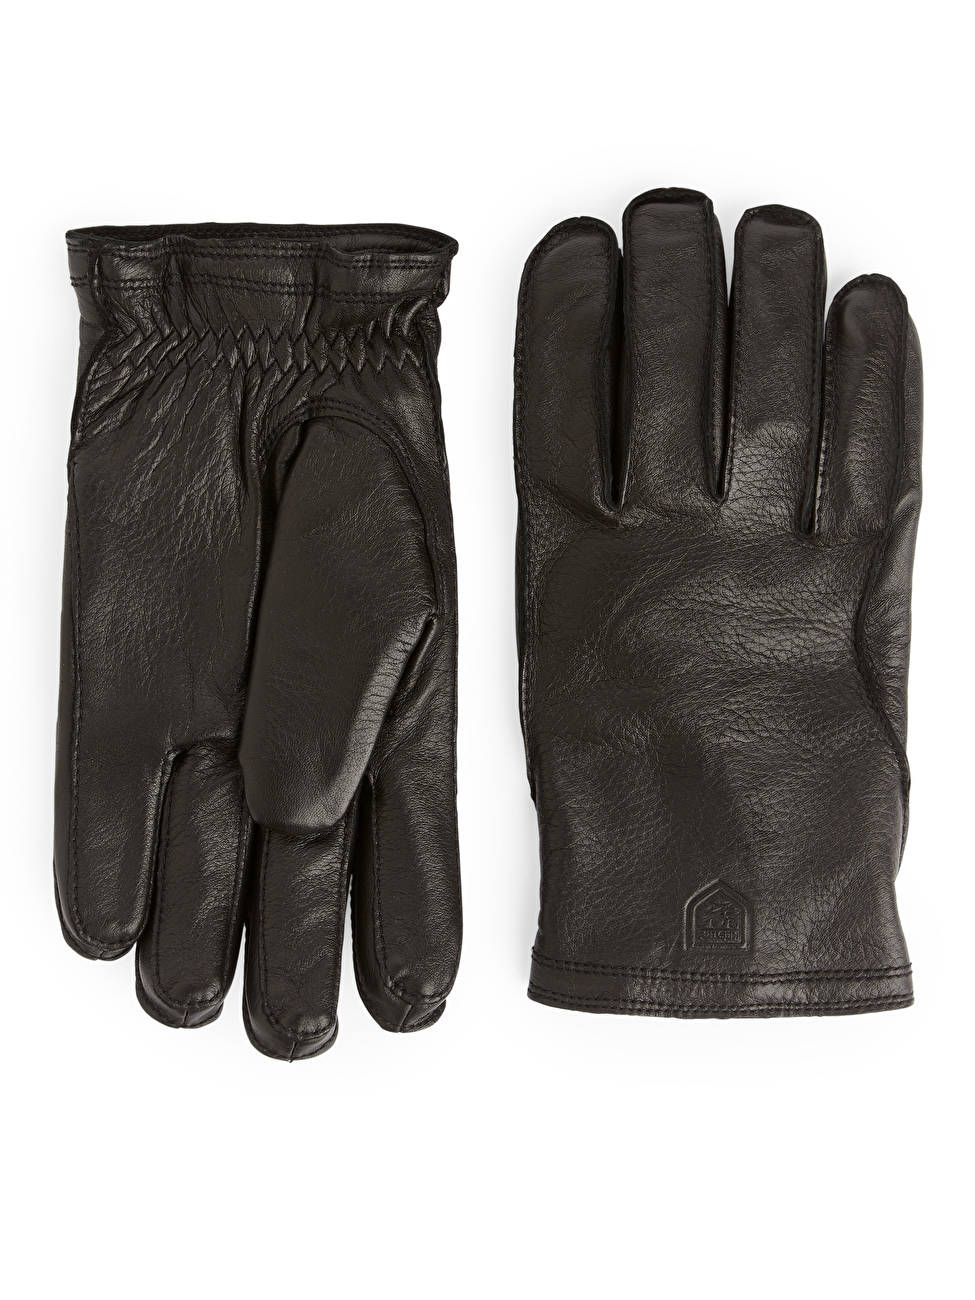 Hestra Håkon Fleece-Lined Leather Gloves | ARKET (US&UK)